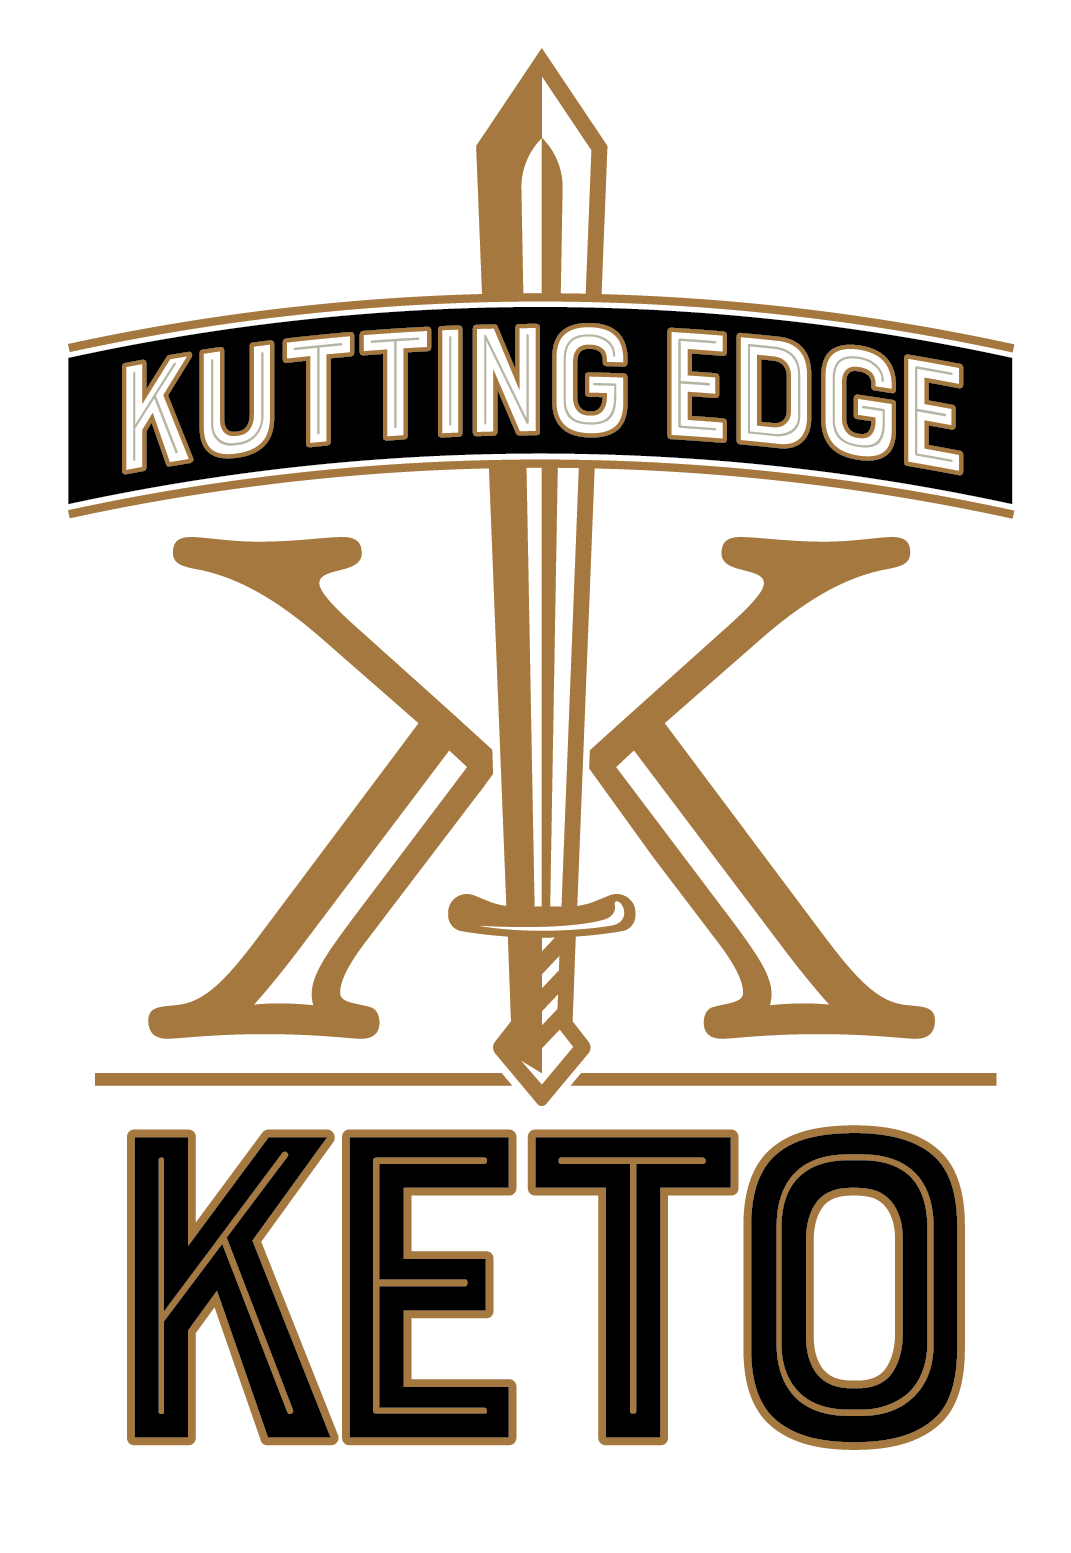 Kutting Edge Keto LLC